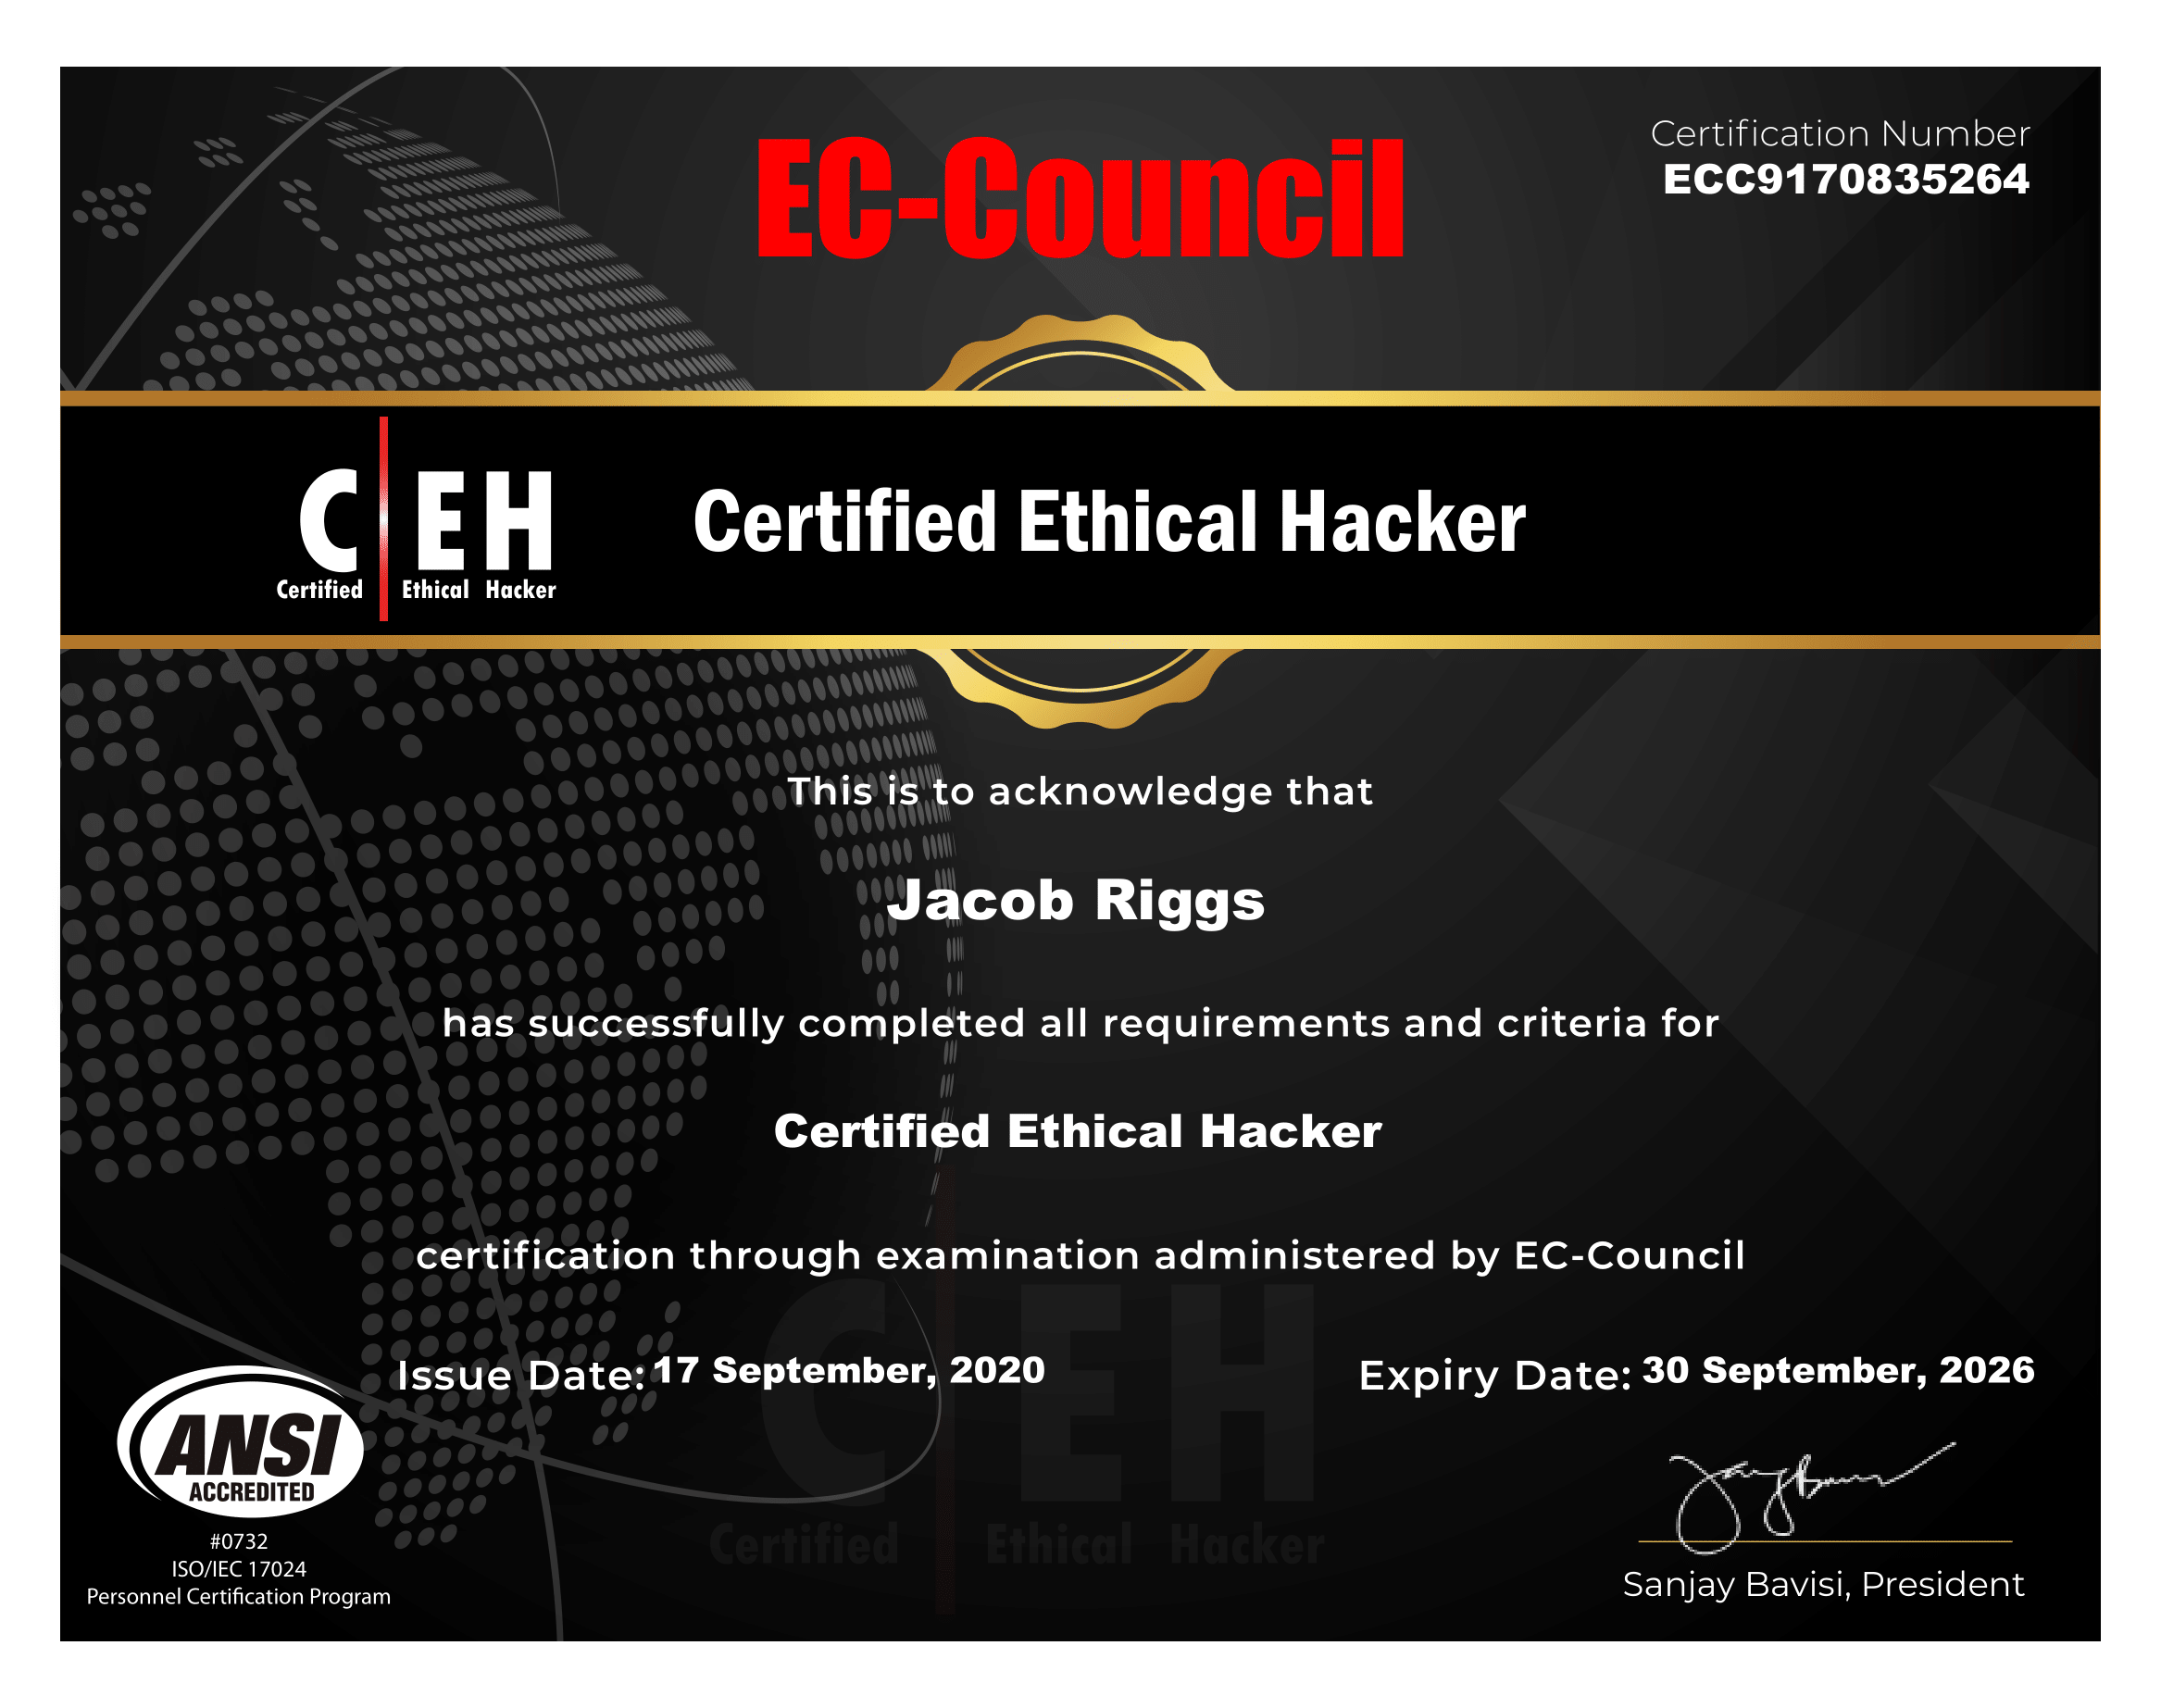 CEH Certificate